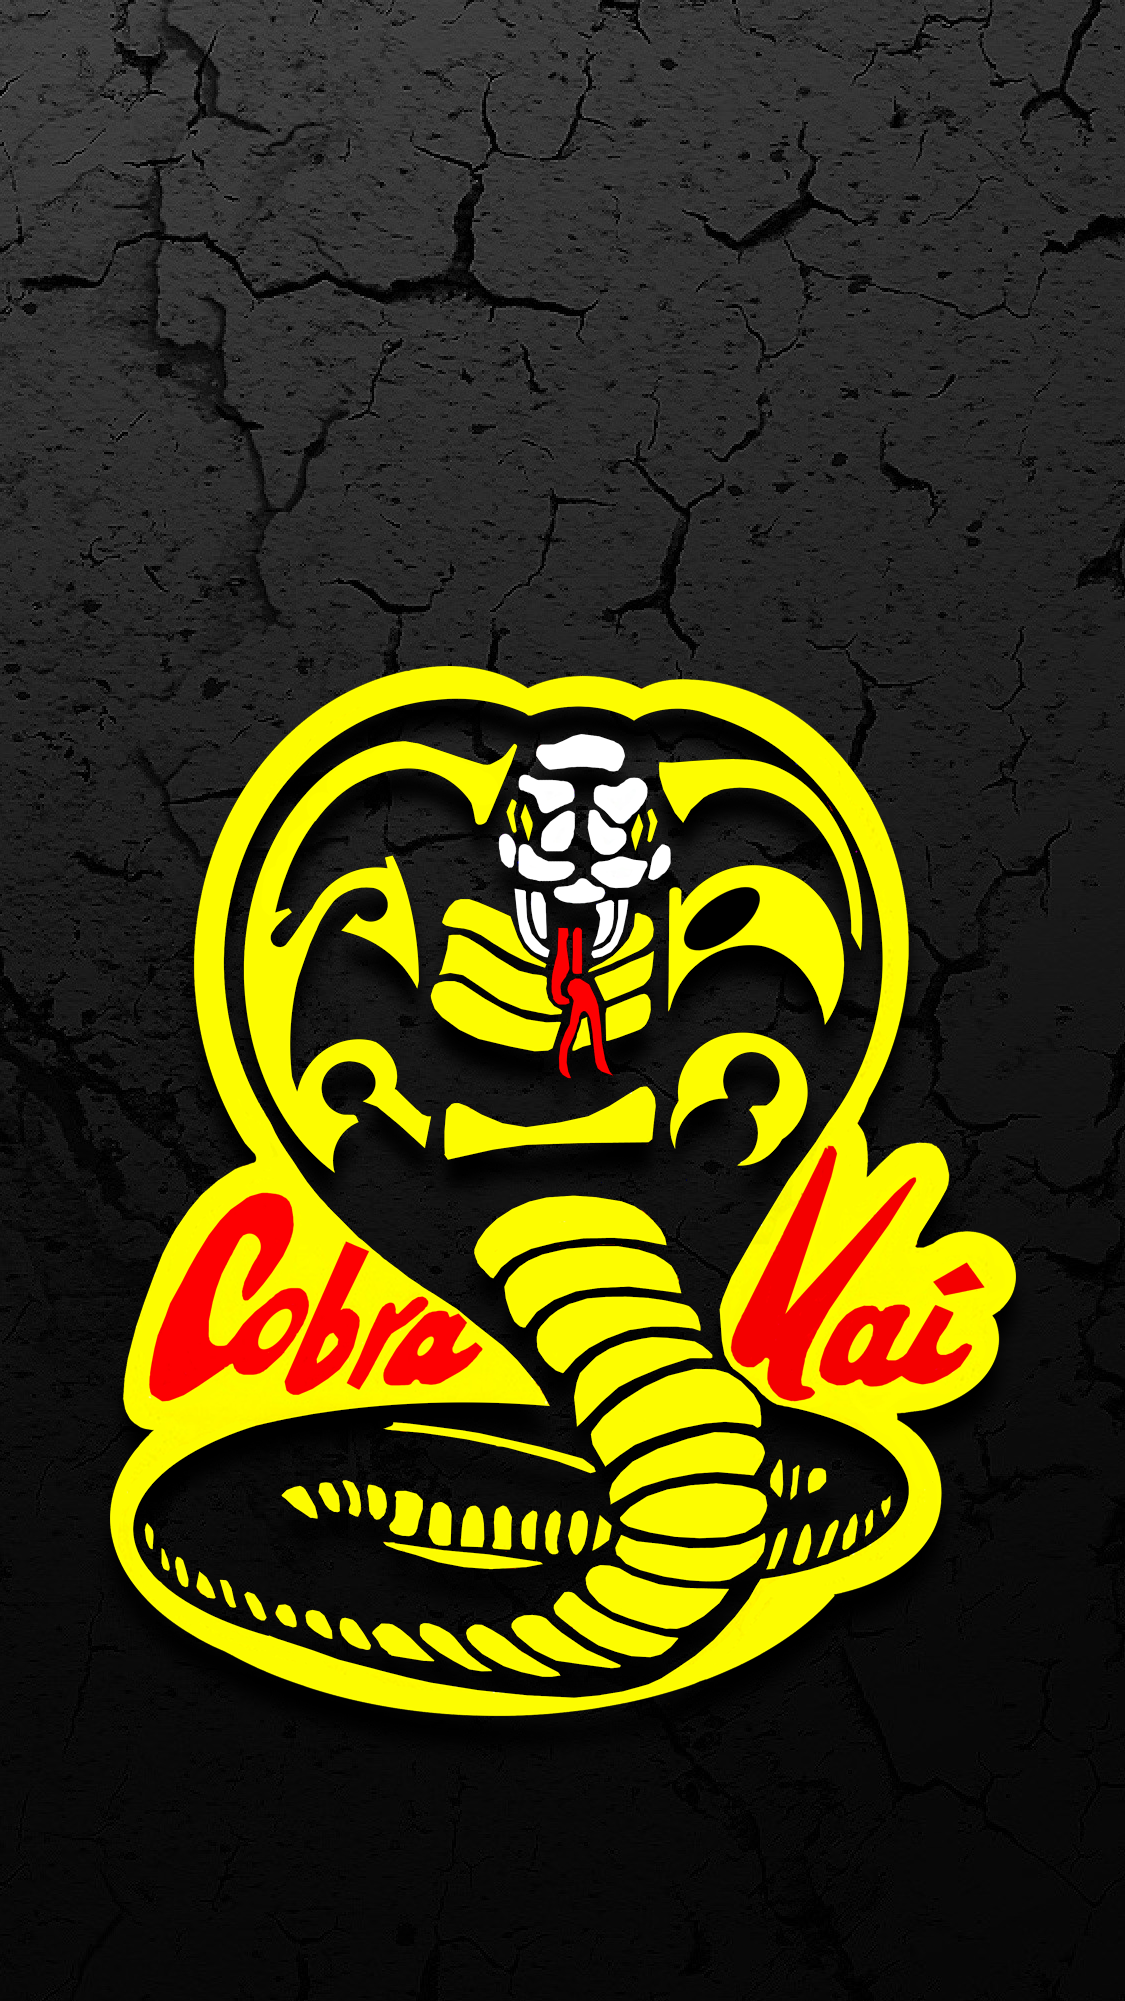  Cobra Kai logo wallpaper   Wallery